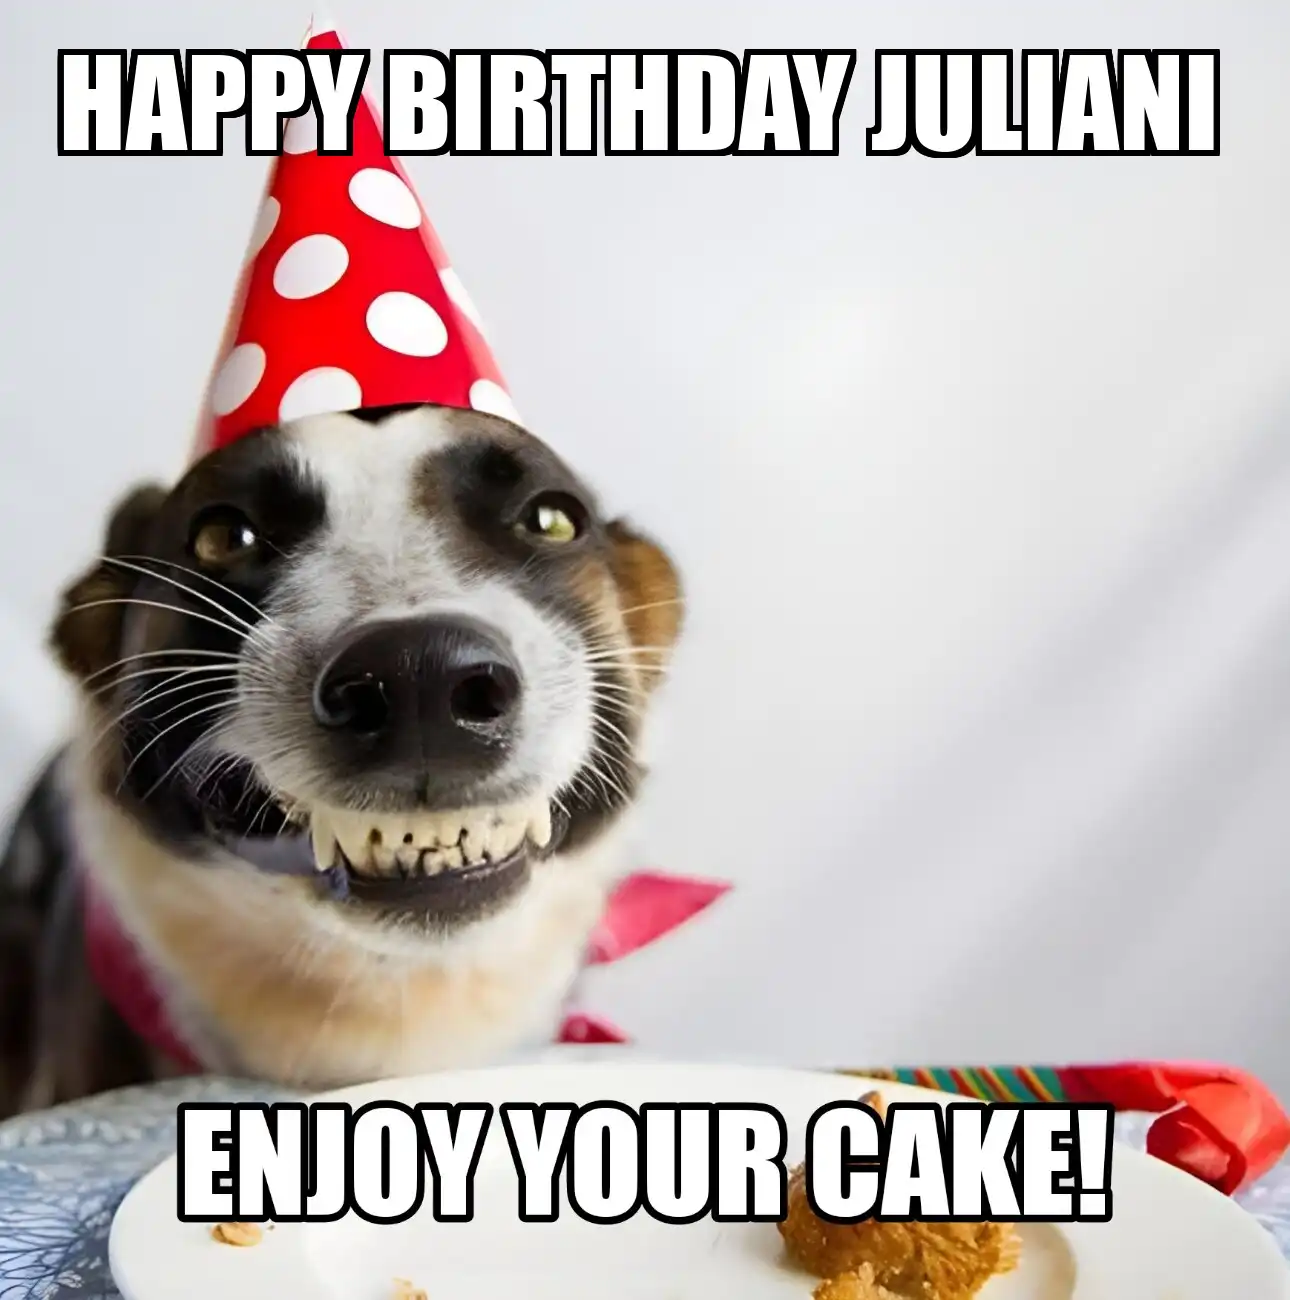 Happy Birthday Juliani Enjoy Your Cake Dog Meme